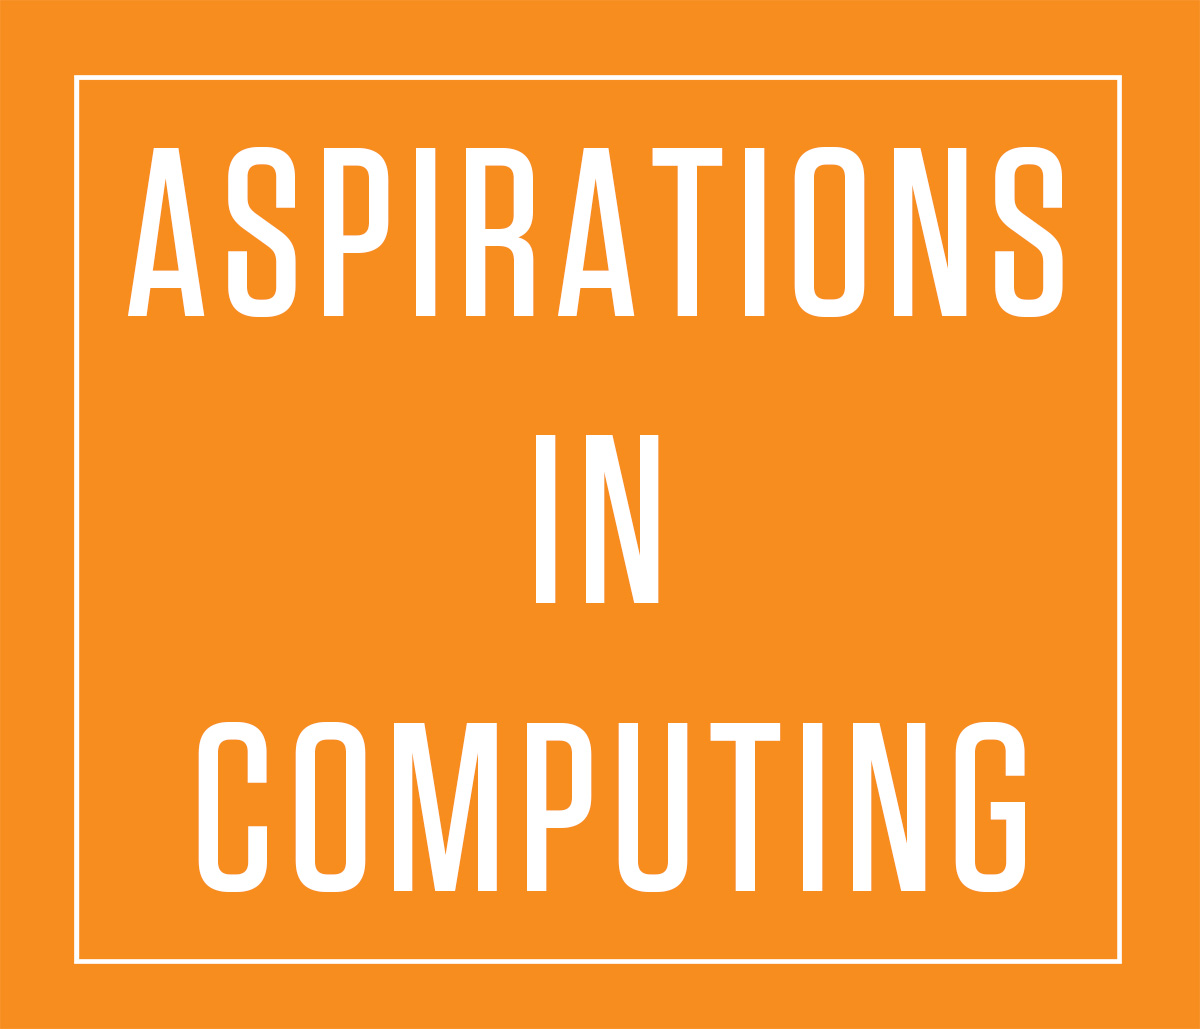 ASPIRATIONS IN COMPUTING